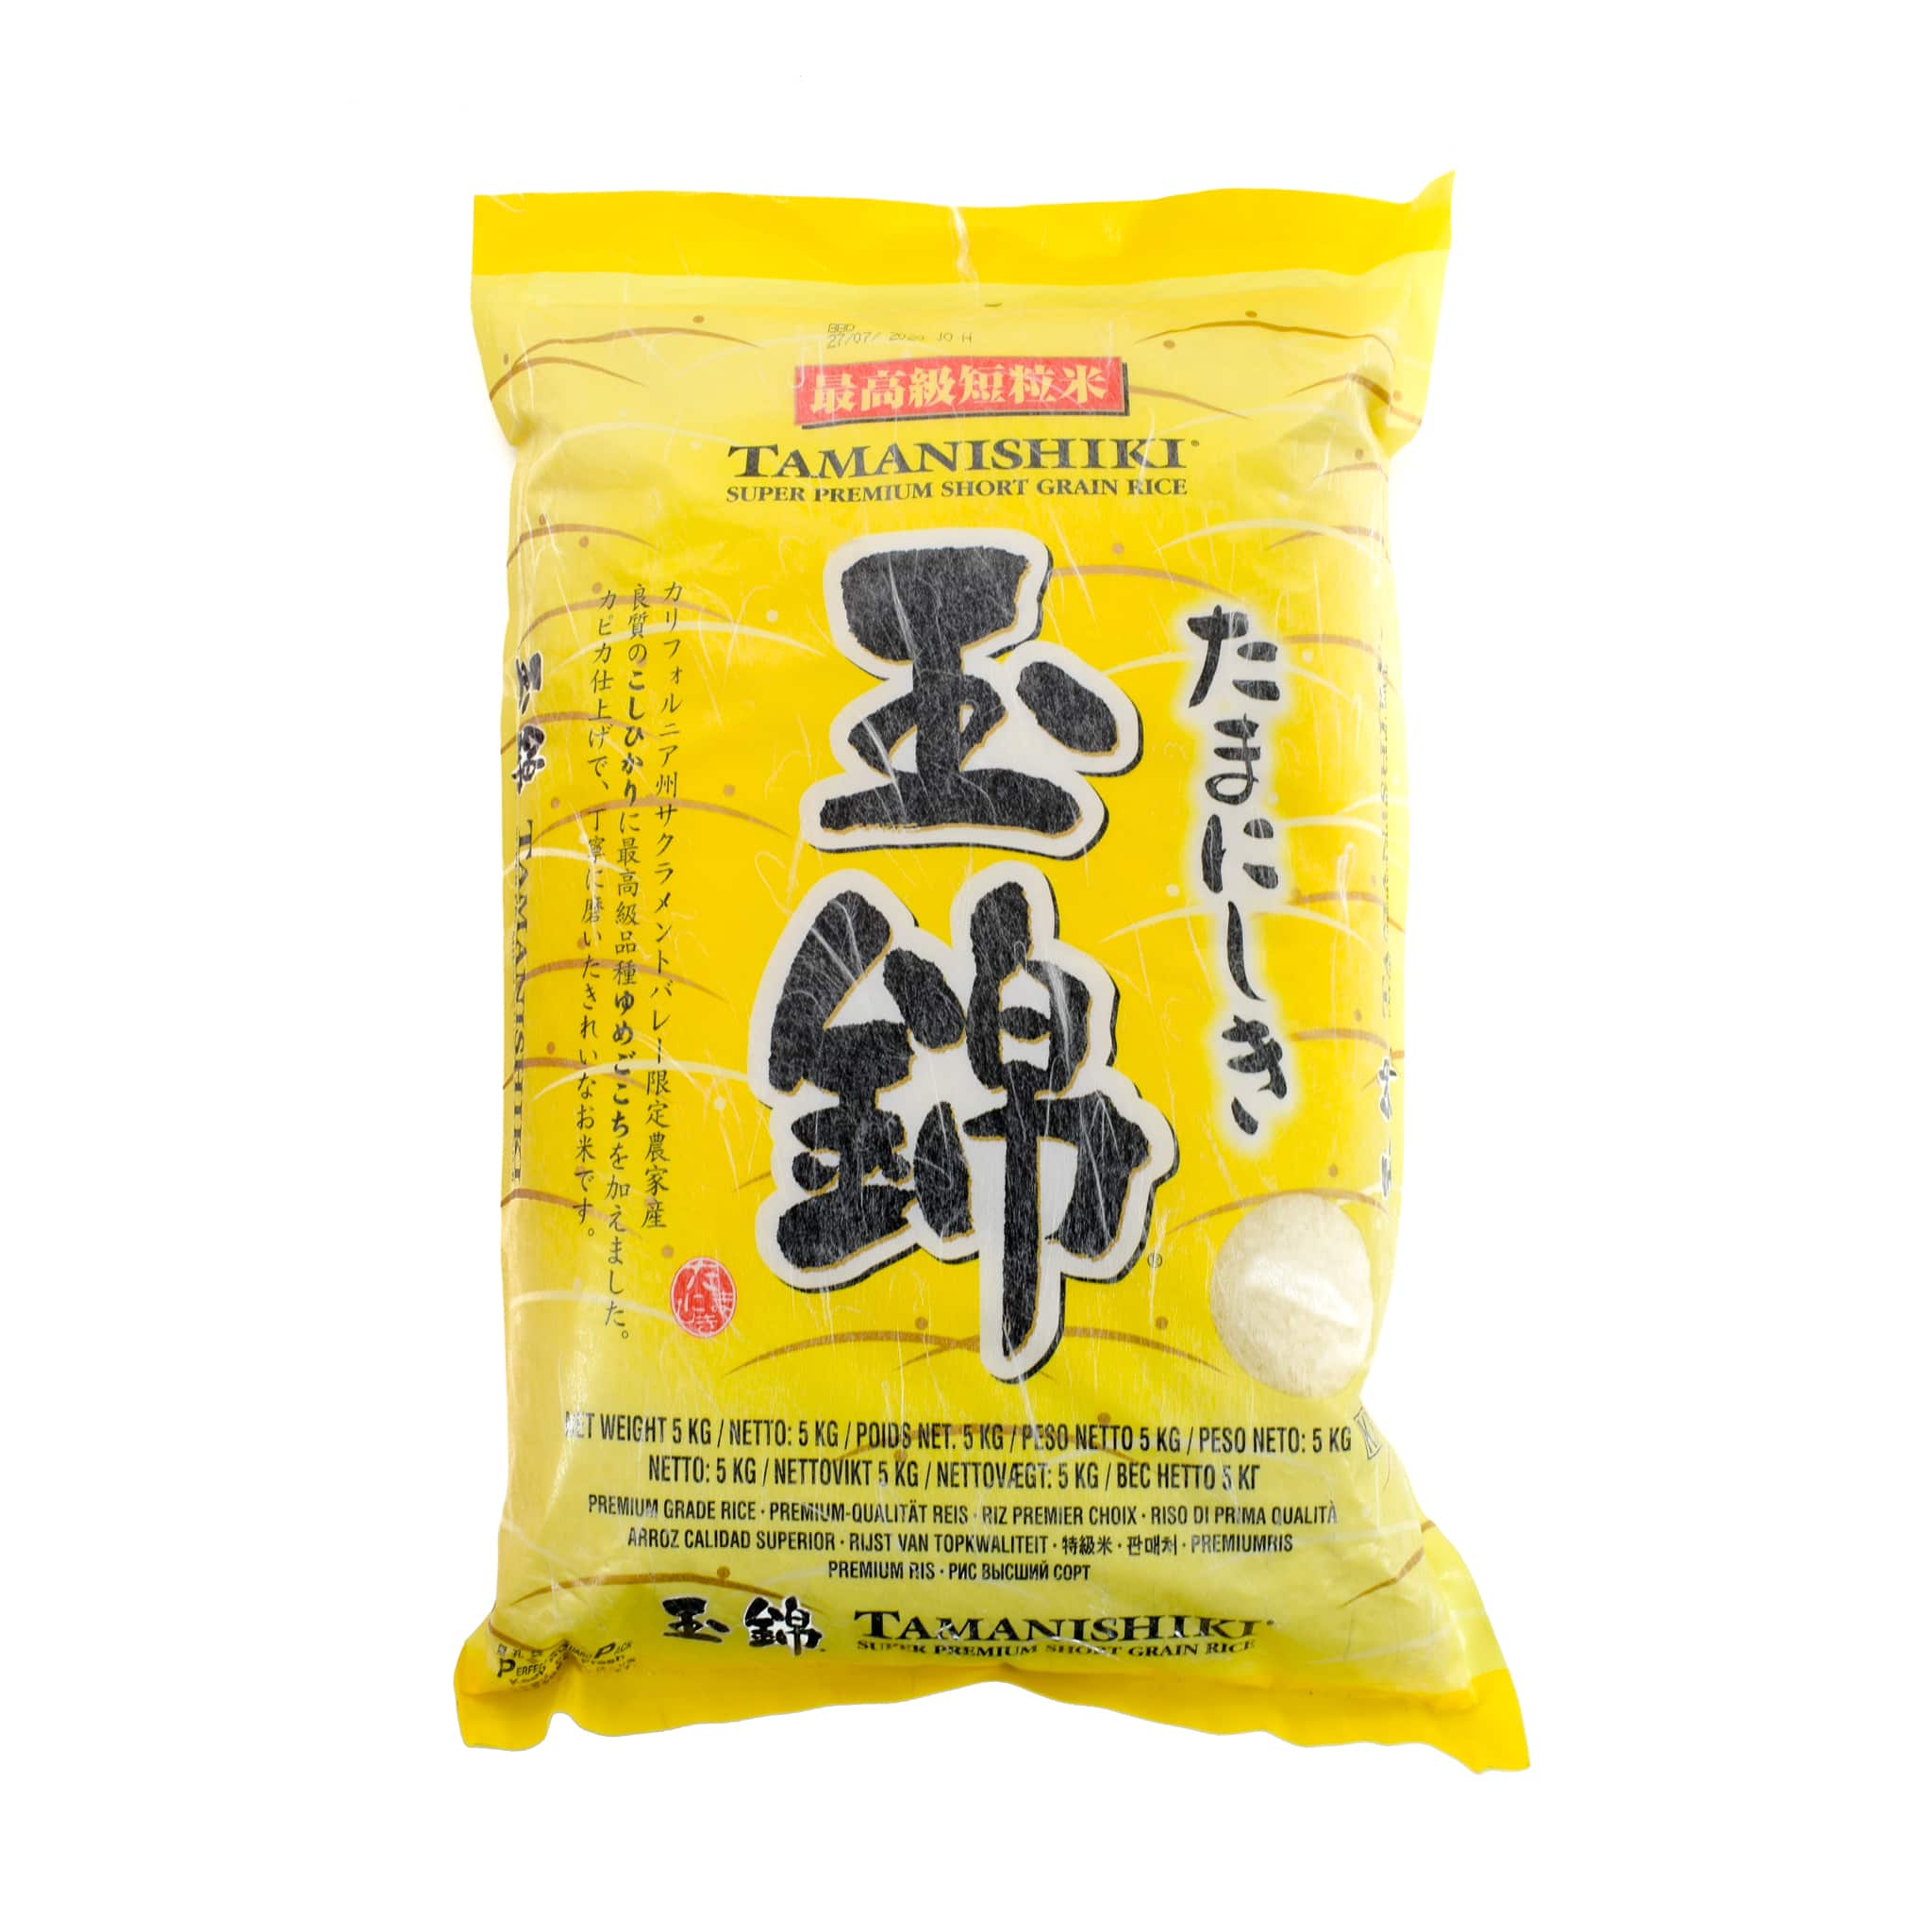 Tamanishiki Short Grain Sushi Rice, 5kg